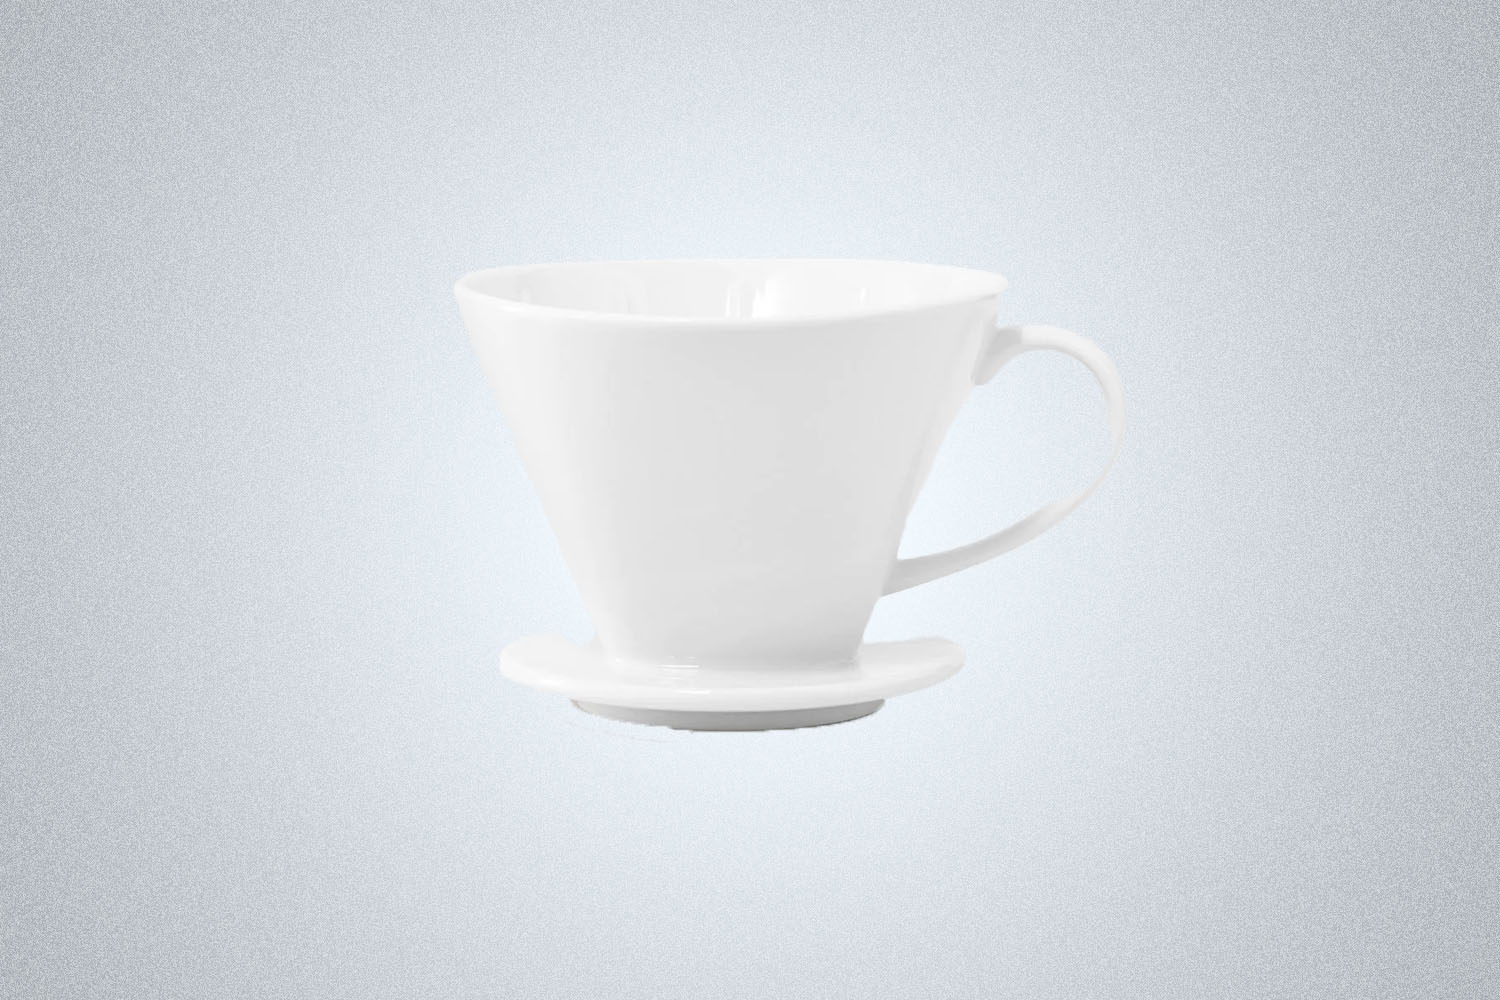 https://www.insidehook.com/wp-content/uploads/2022/09/Public-Good-Pour-Over-Coffee-Maker.jpg?w=1500&resize=1500%2C1000